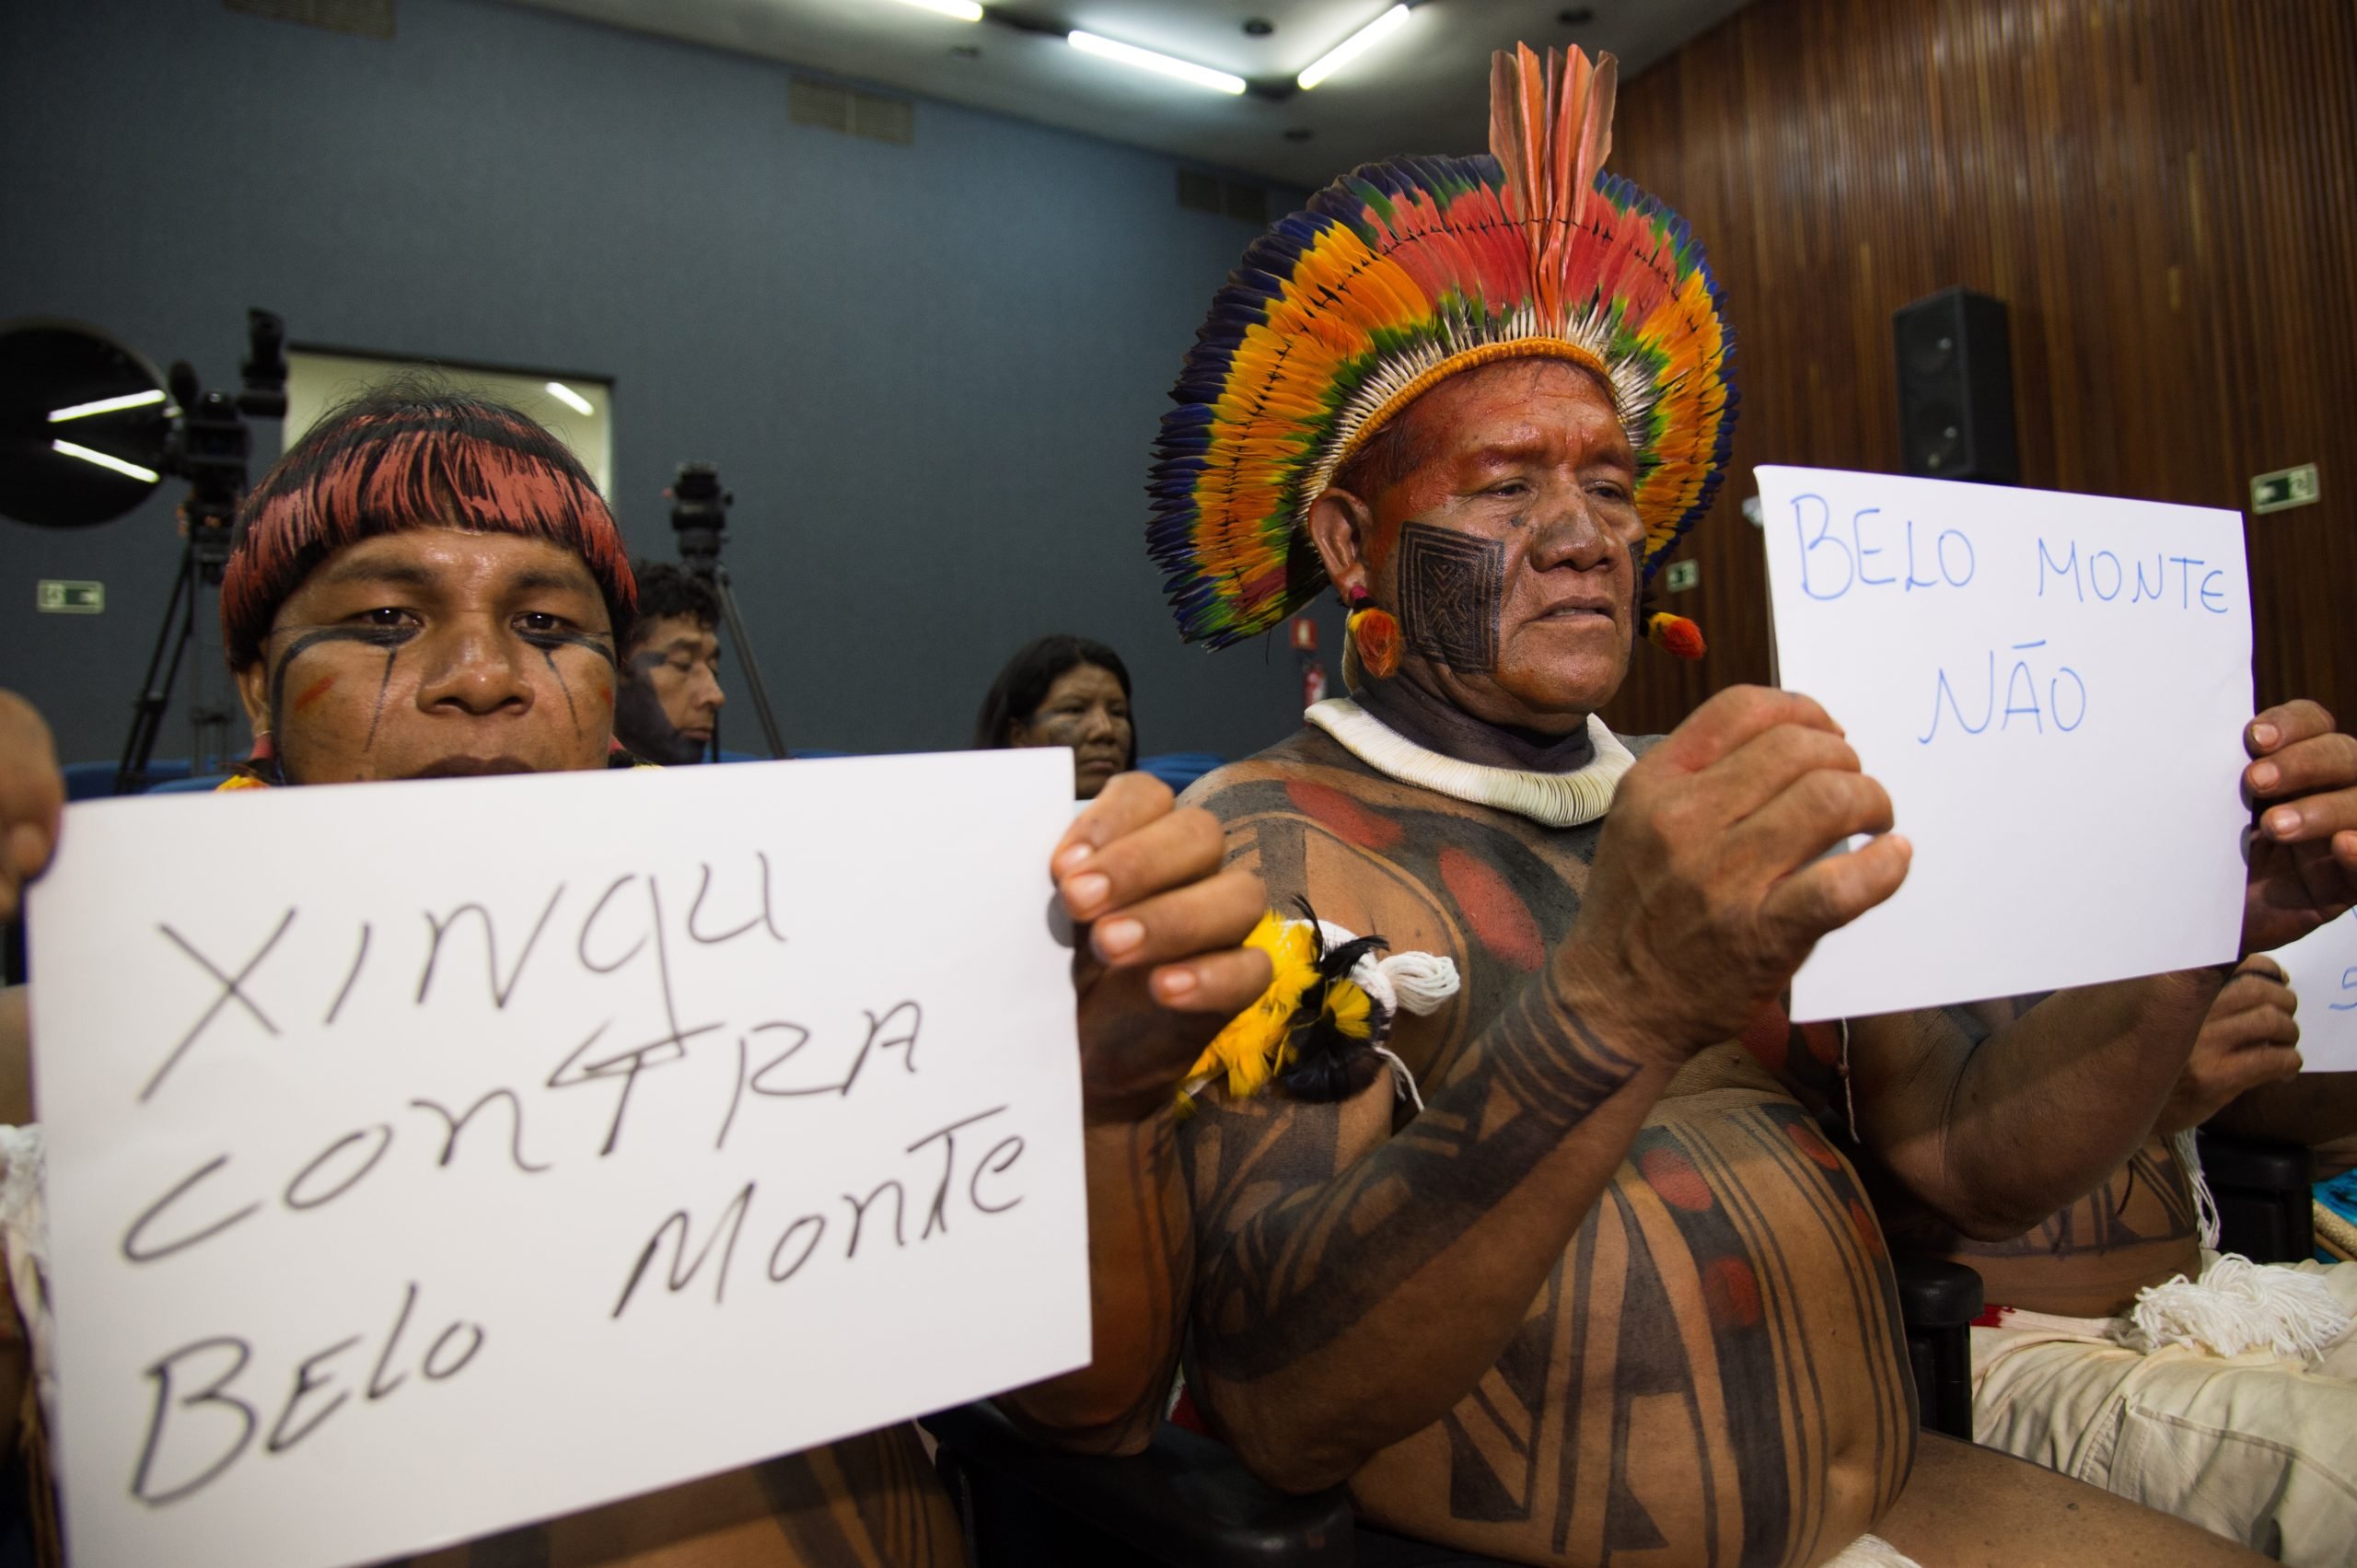 Indigenous people with signs saying "Xingu against Belo Monte".